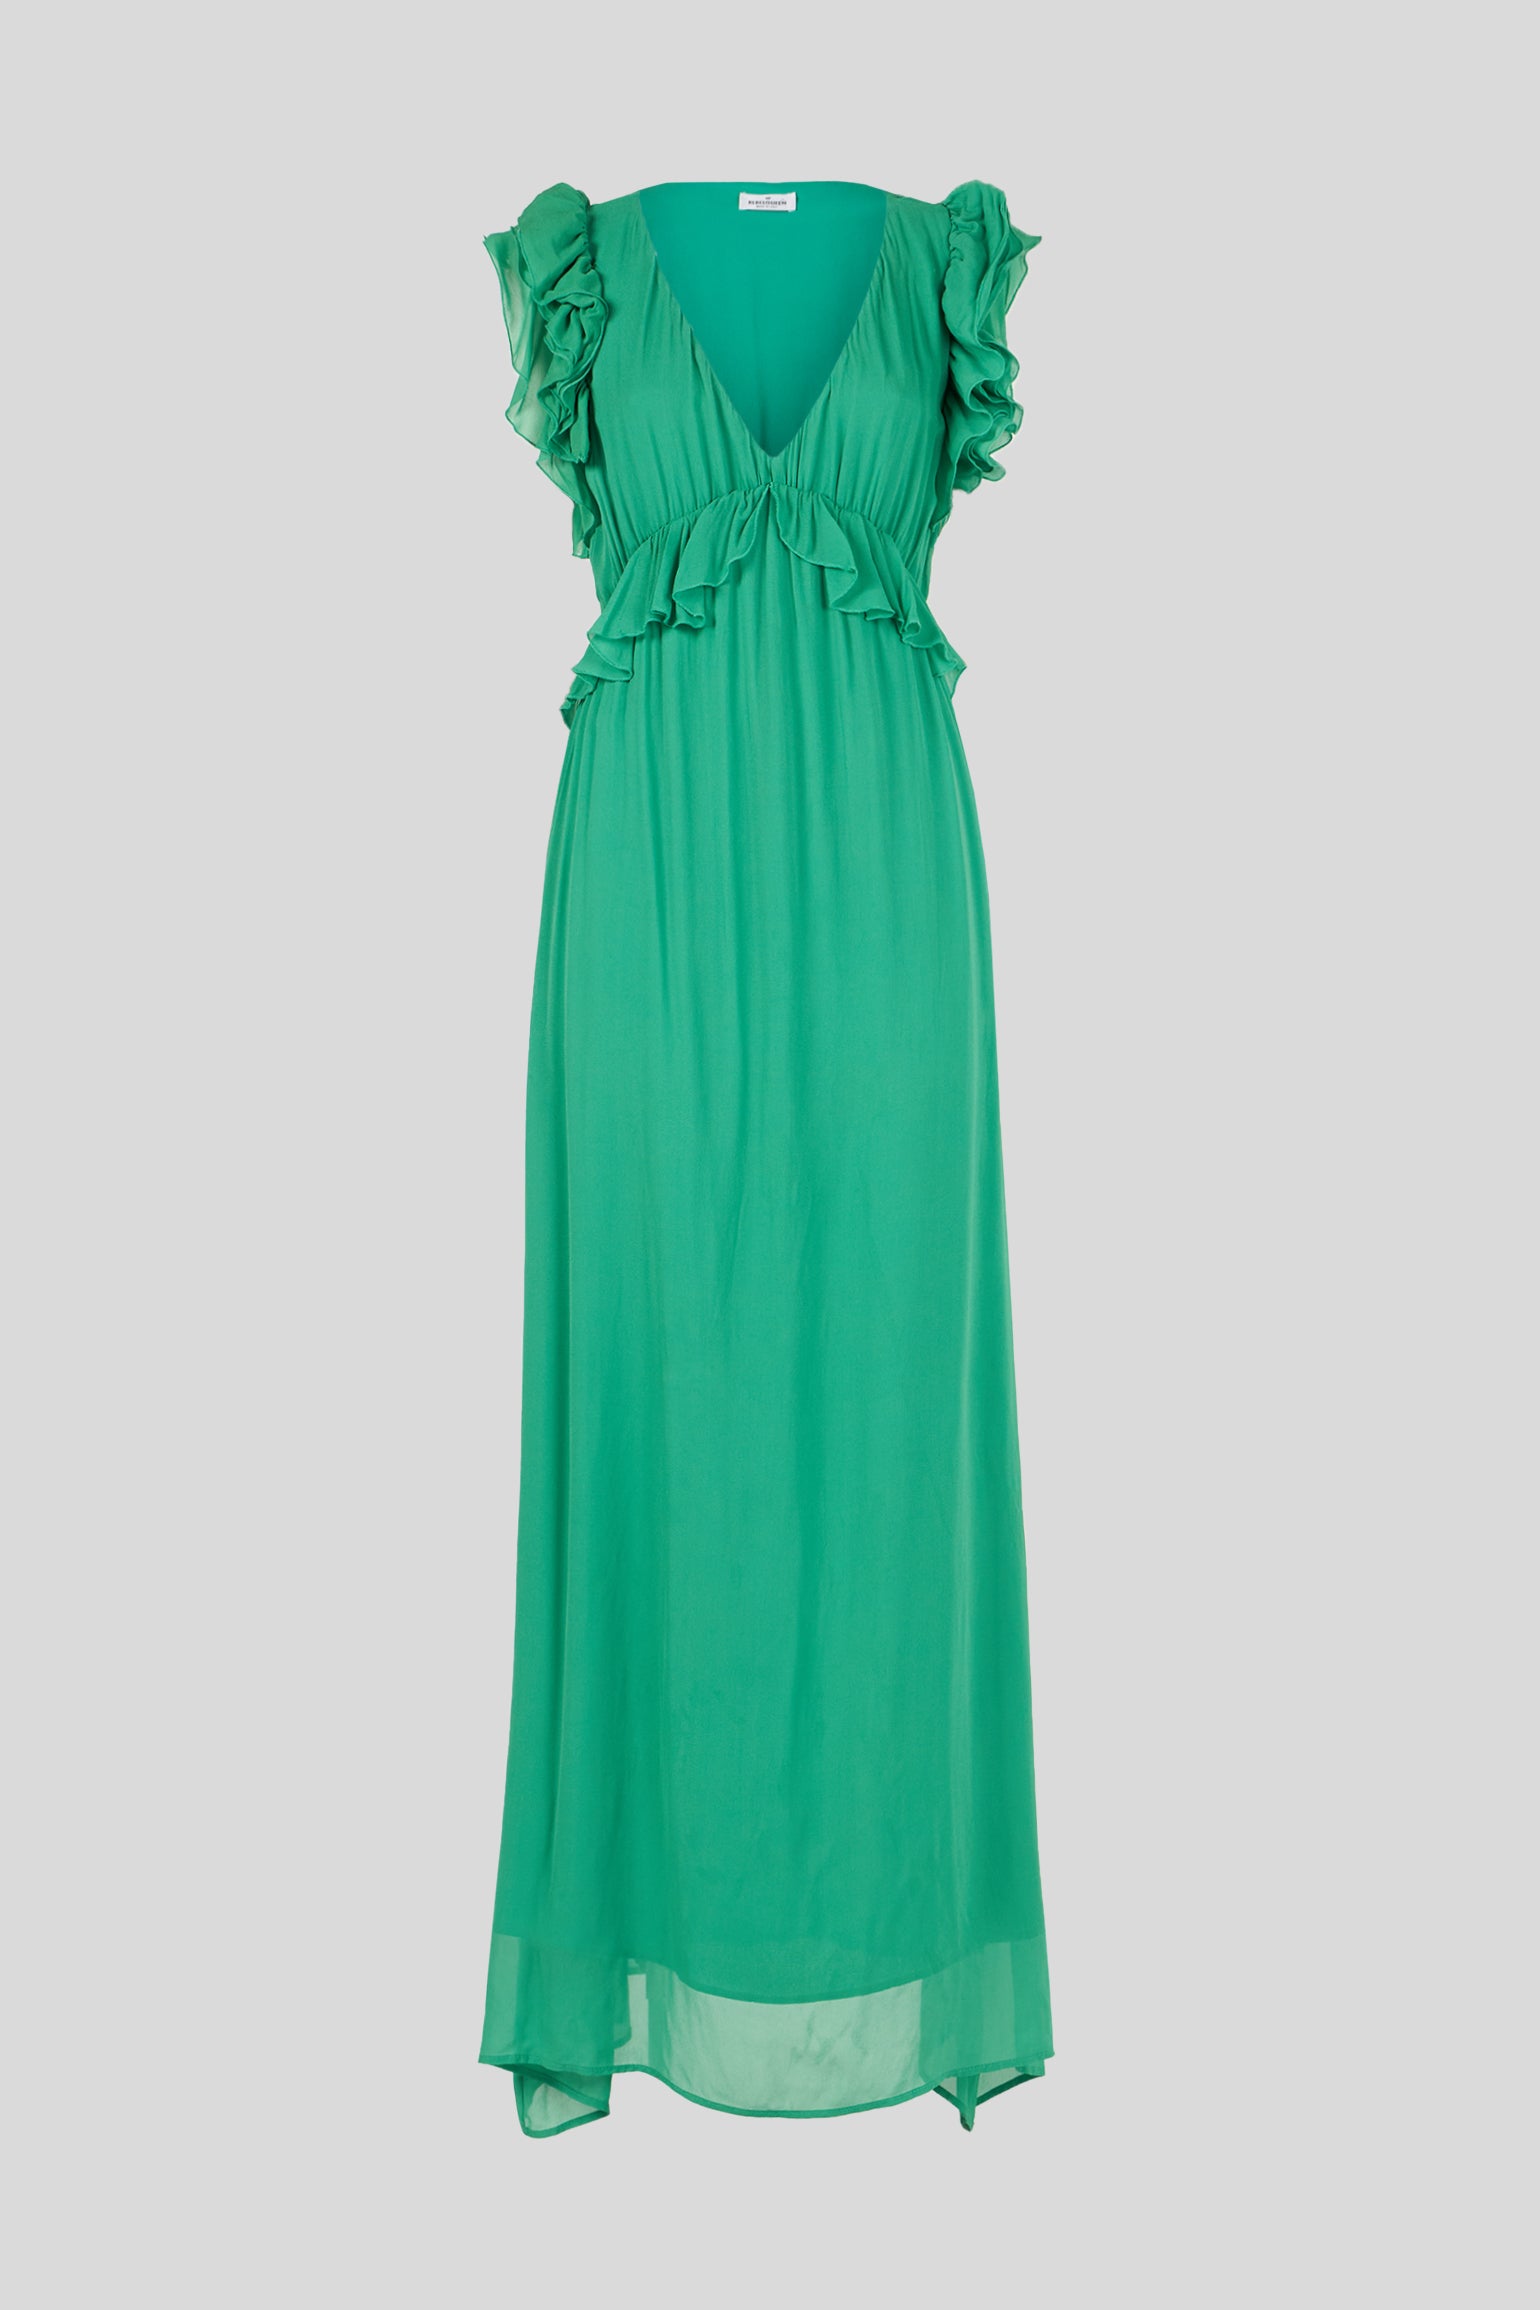 LIU JO Long Emerald Green Dress